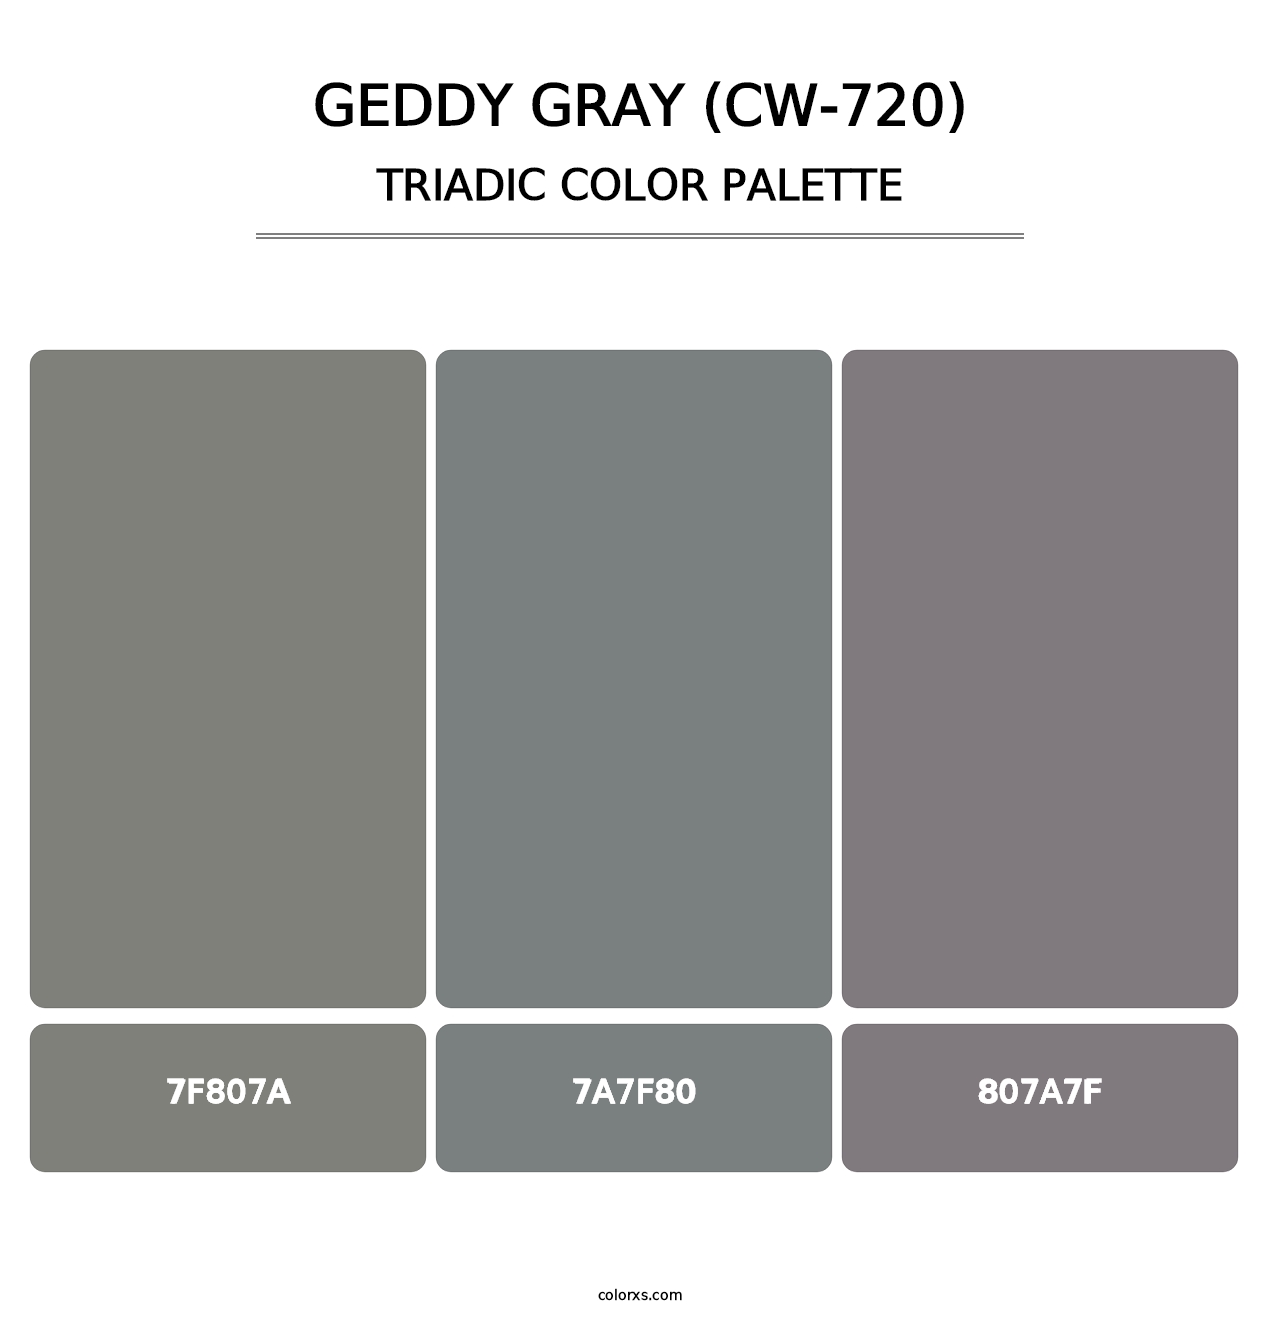 Geddy Gray (CW-720) - Triadic Color Palette